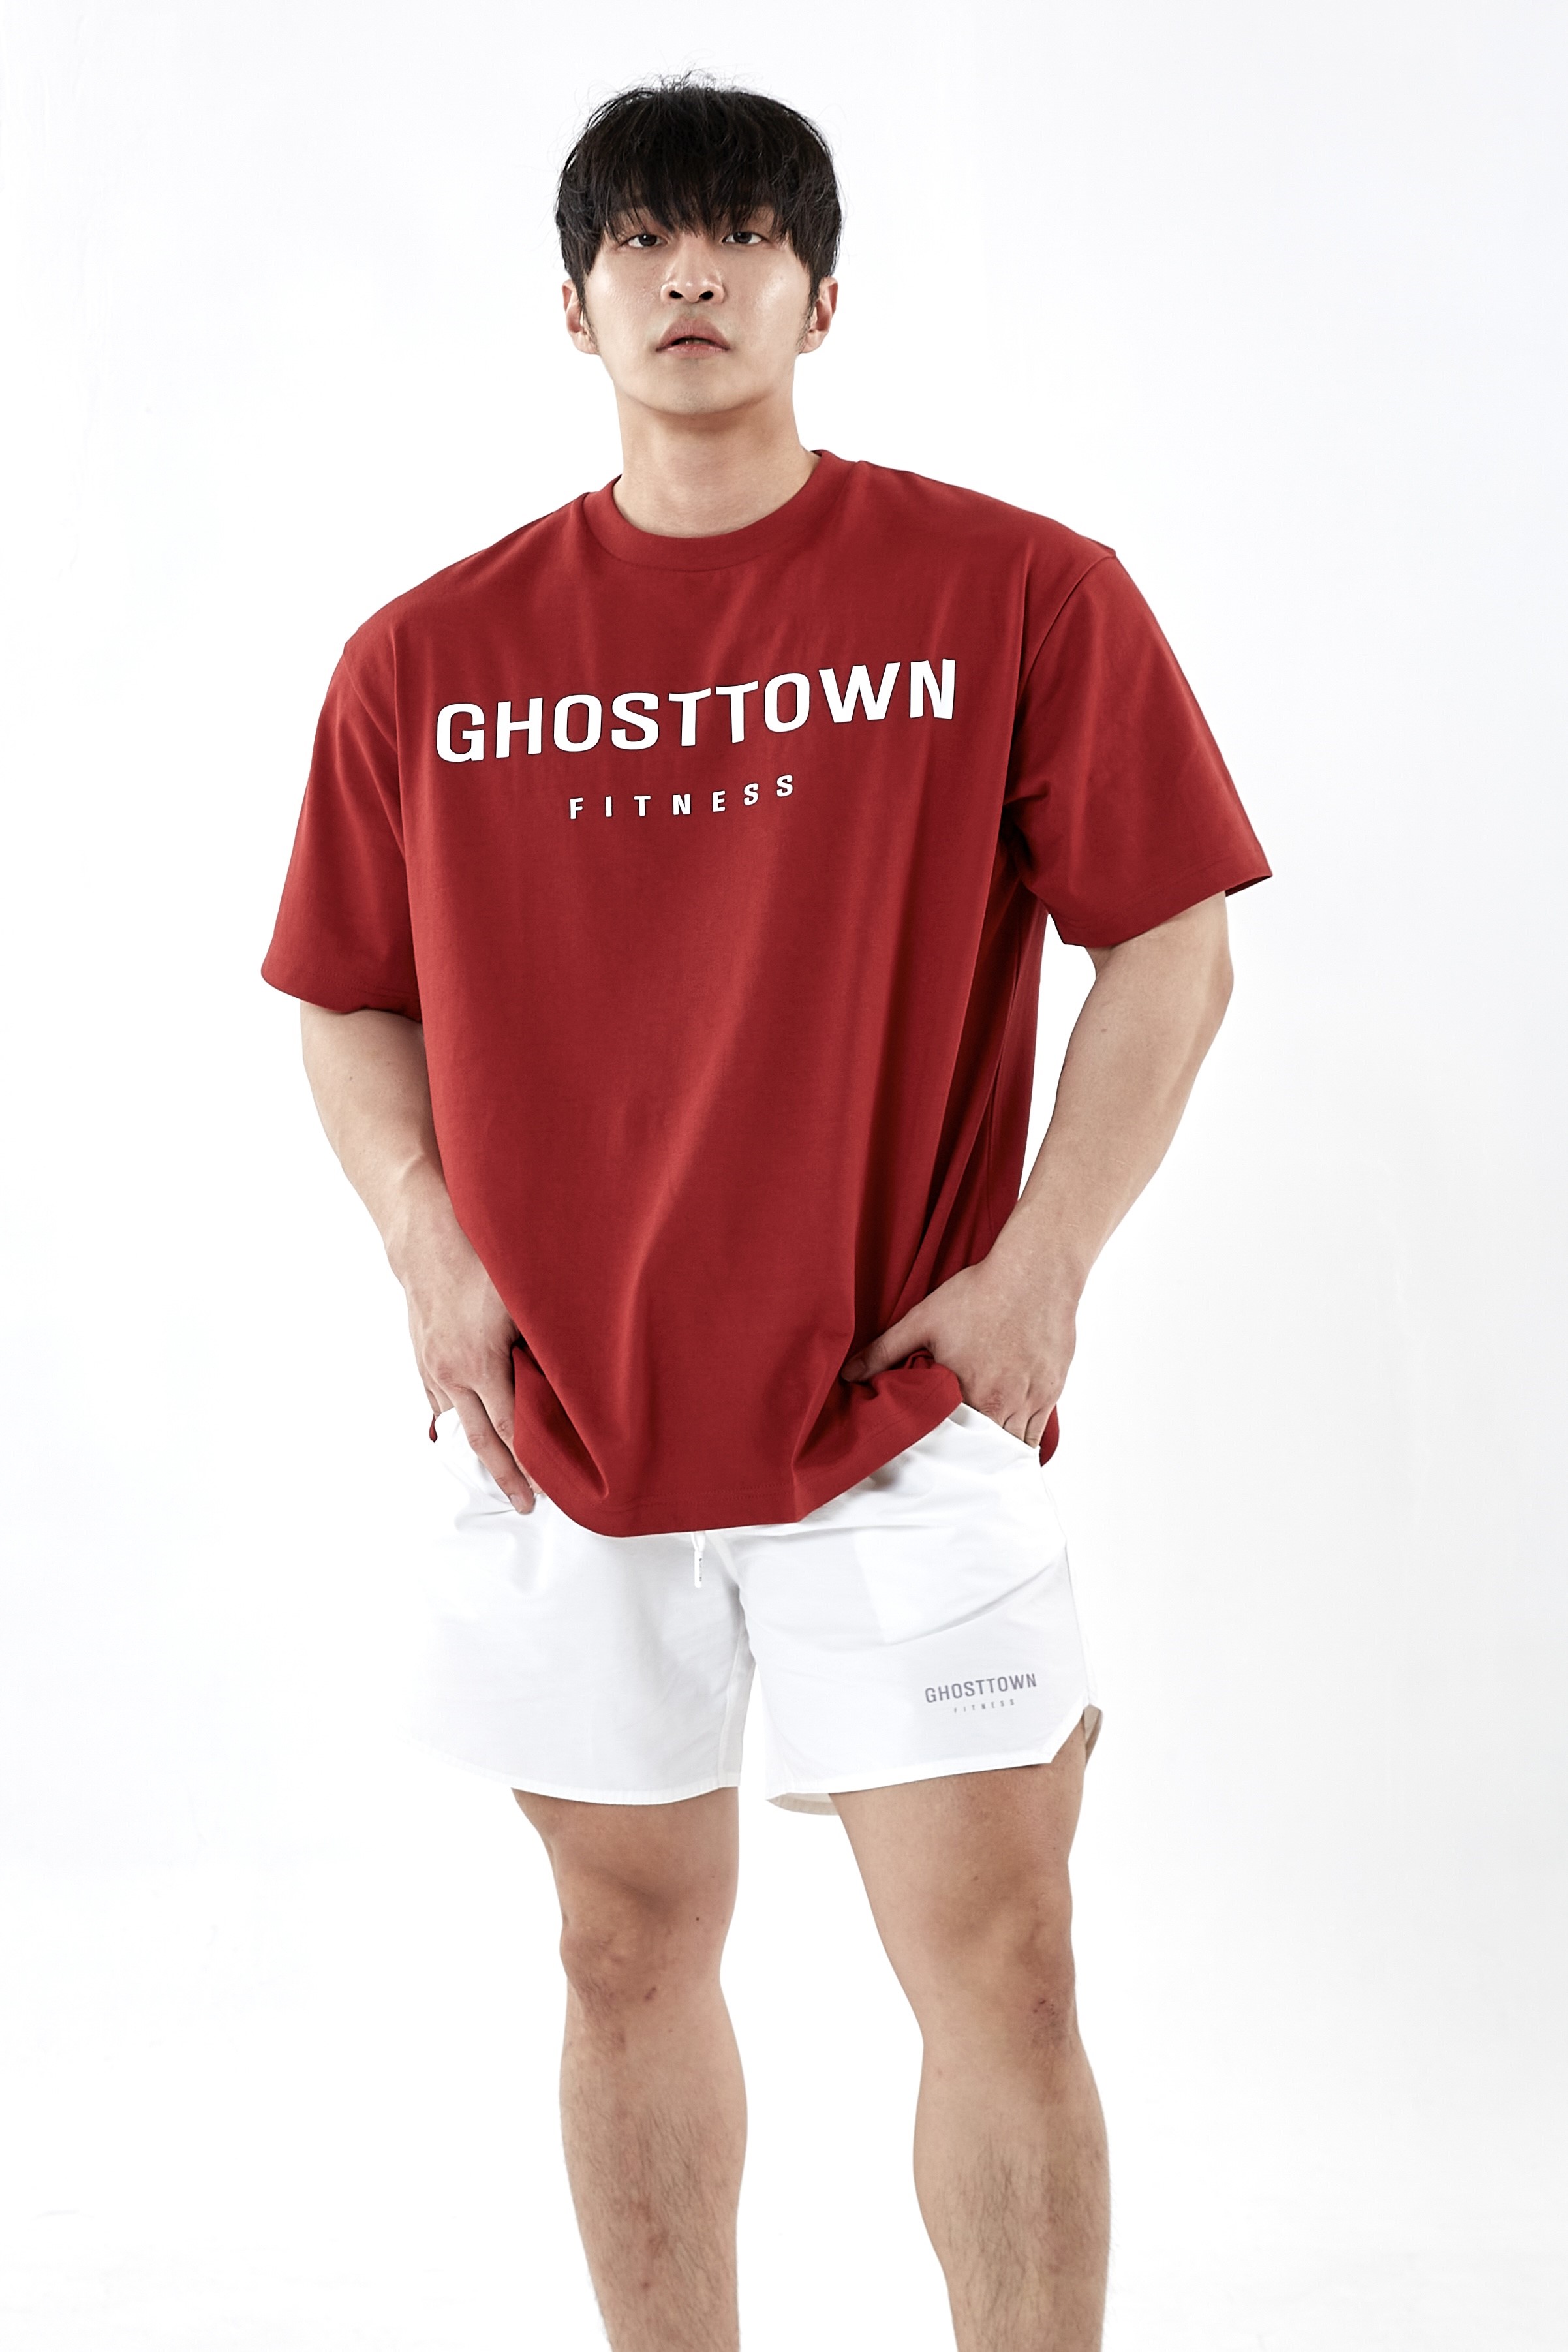 GHOSTTOWN 오리지널 오버핏 티셔츠 버건디 - 고스트타운